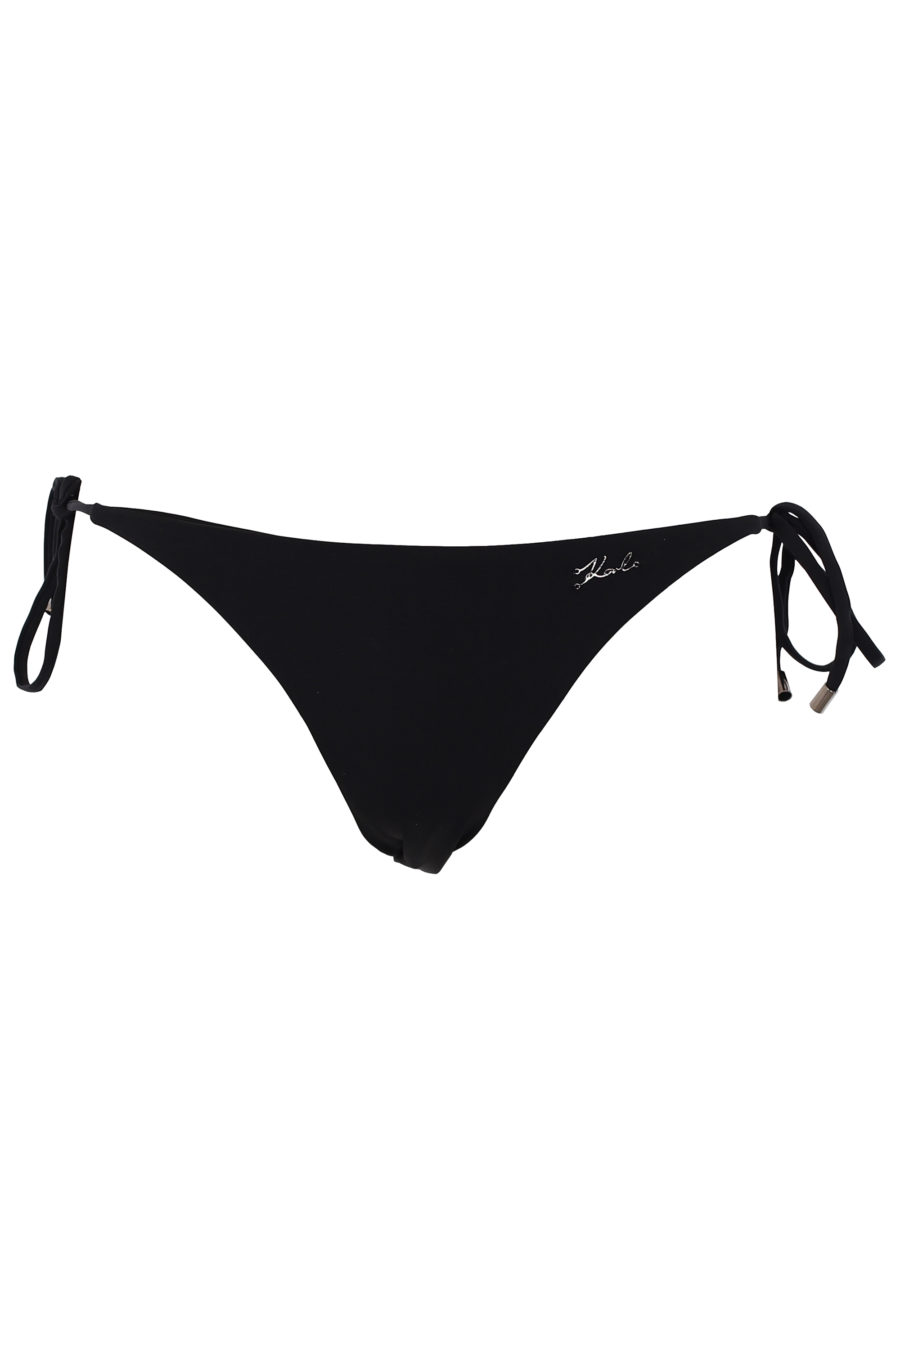 Braguita de bikini negra con cordones y logo "lettering" de metal pequeño - IMG 1332